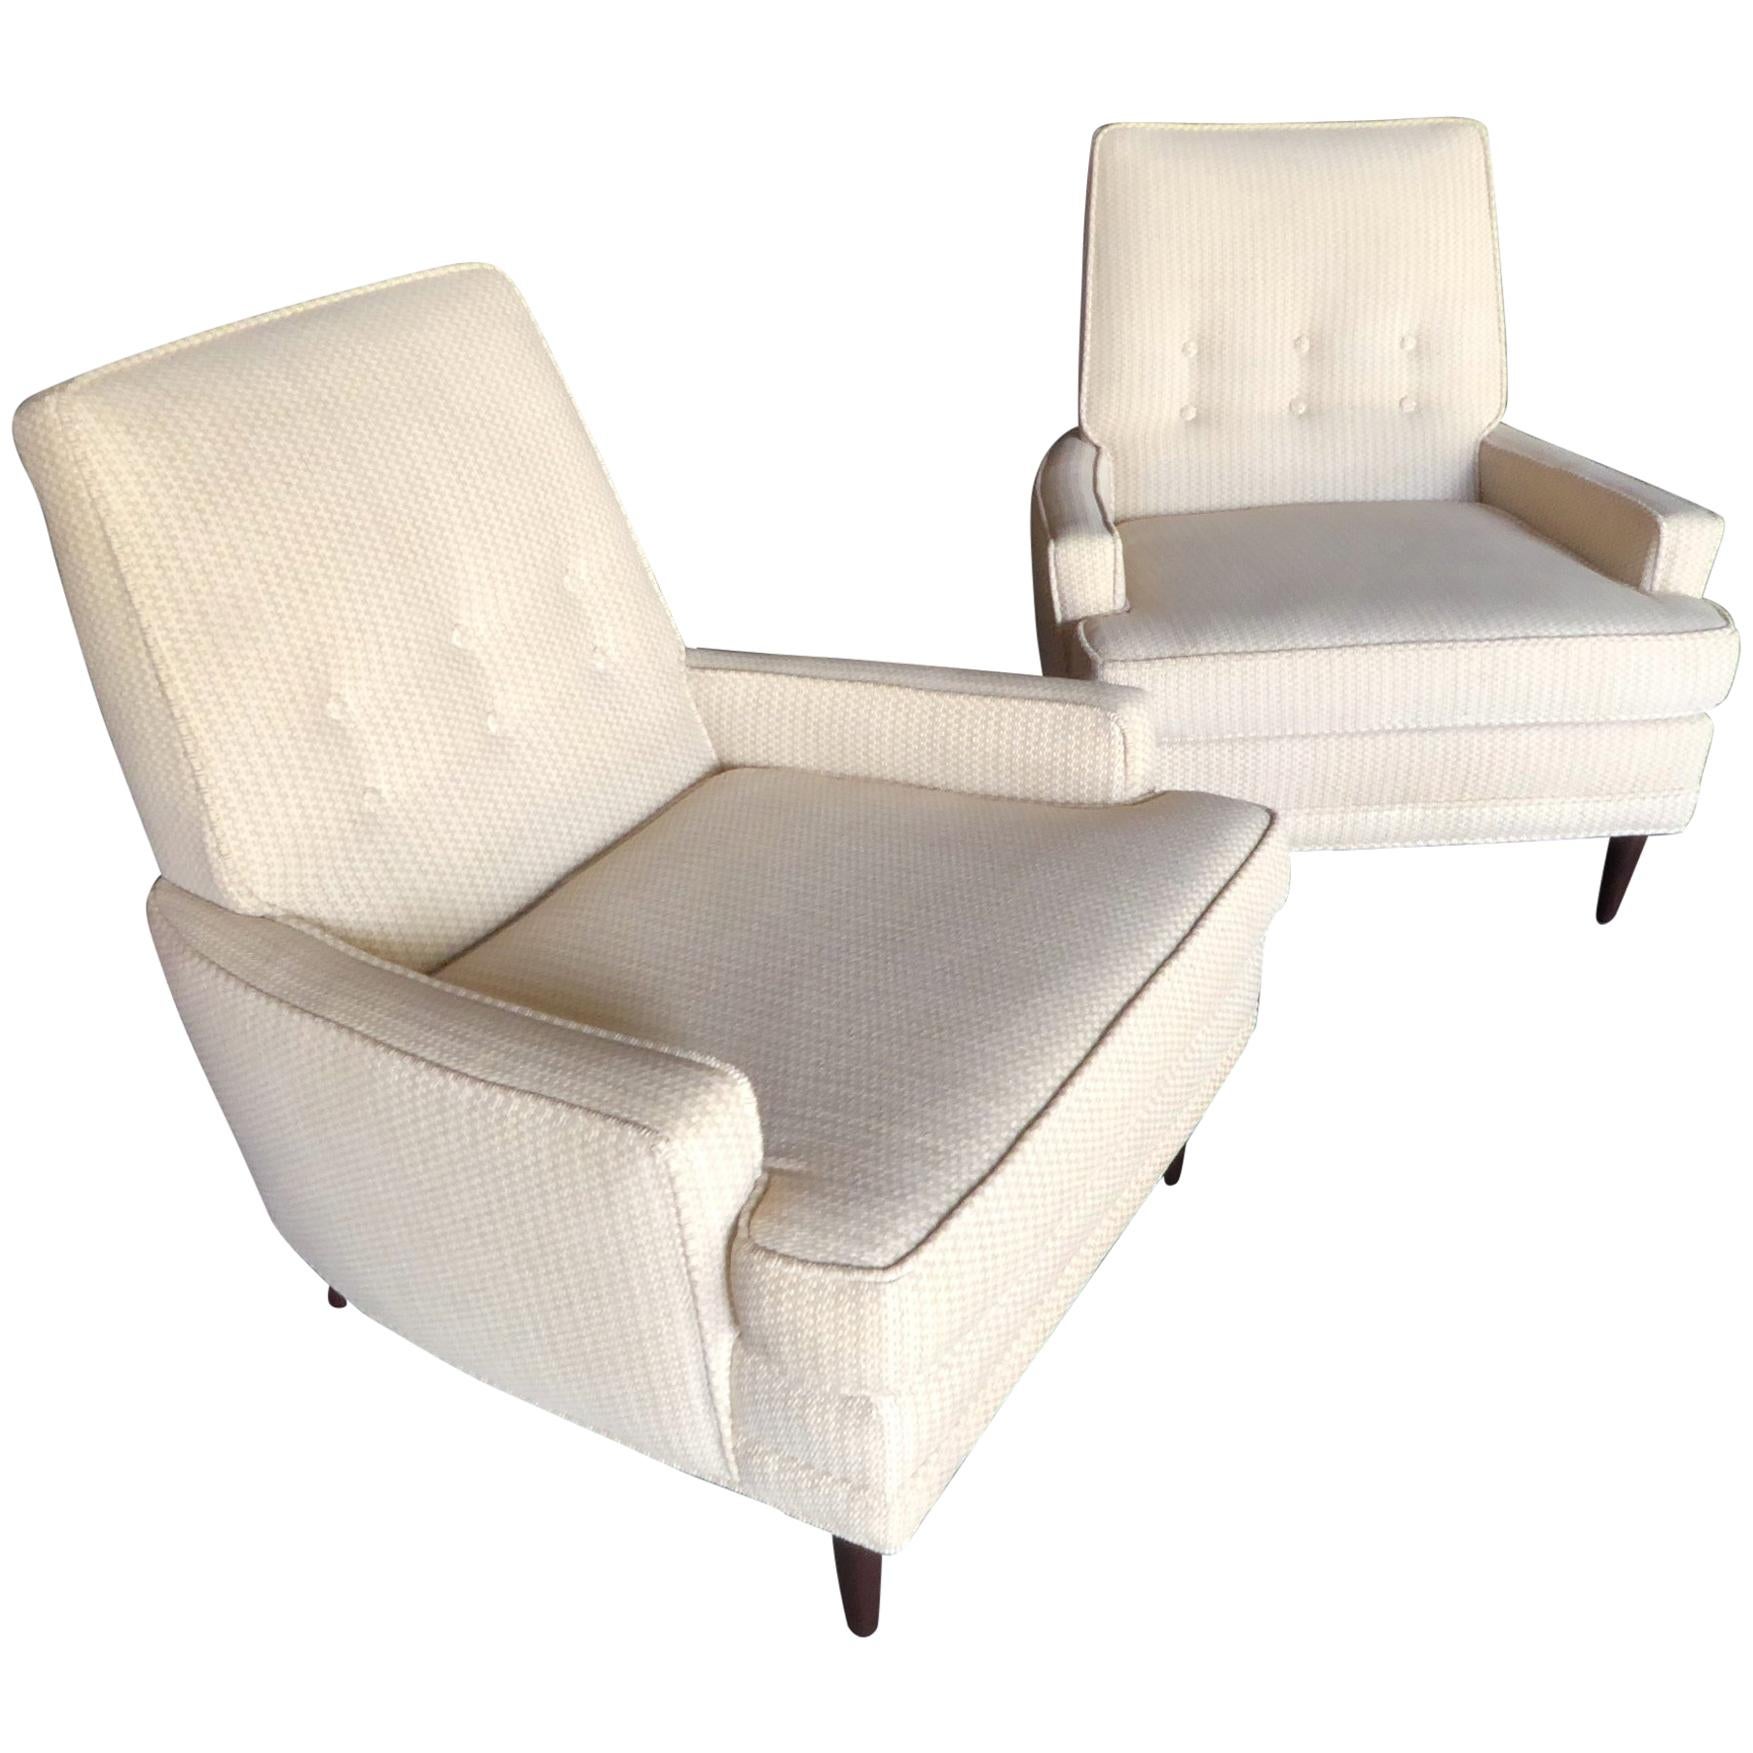 Pair of Kroehler Furniture Upholstered Armchairs